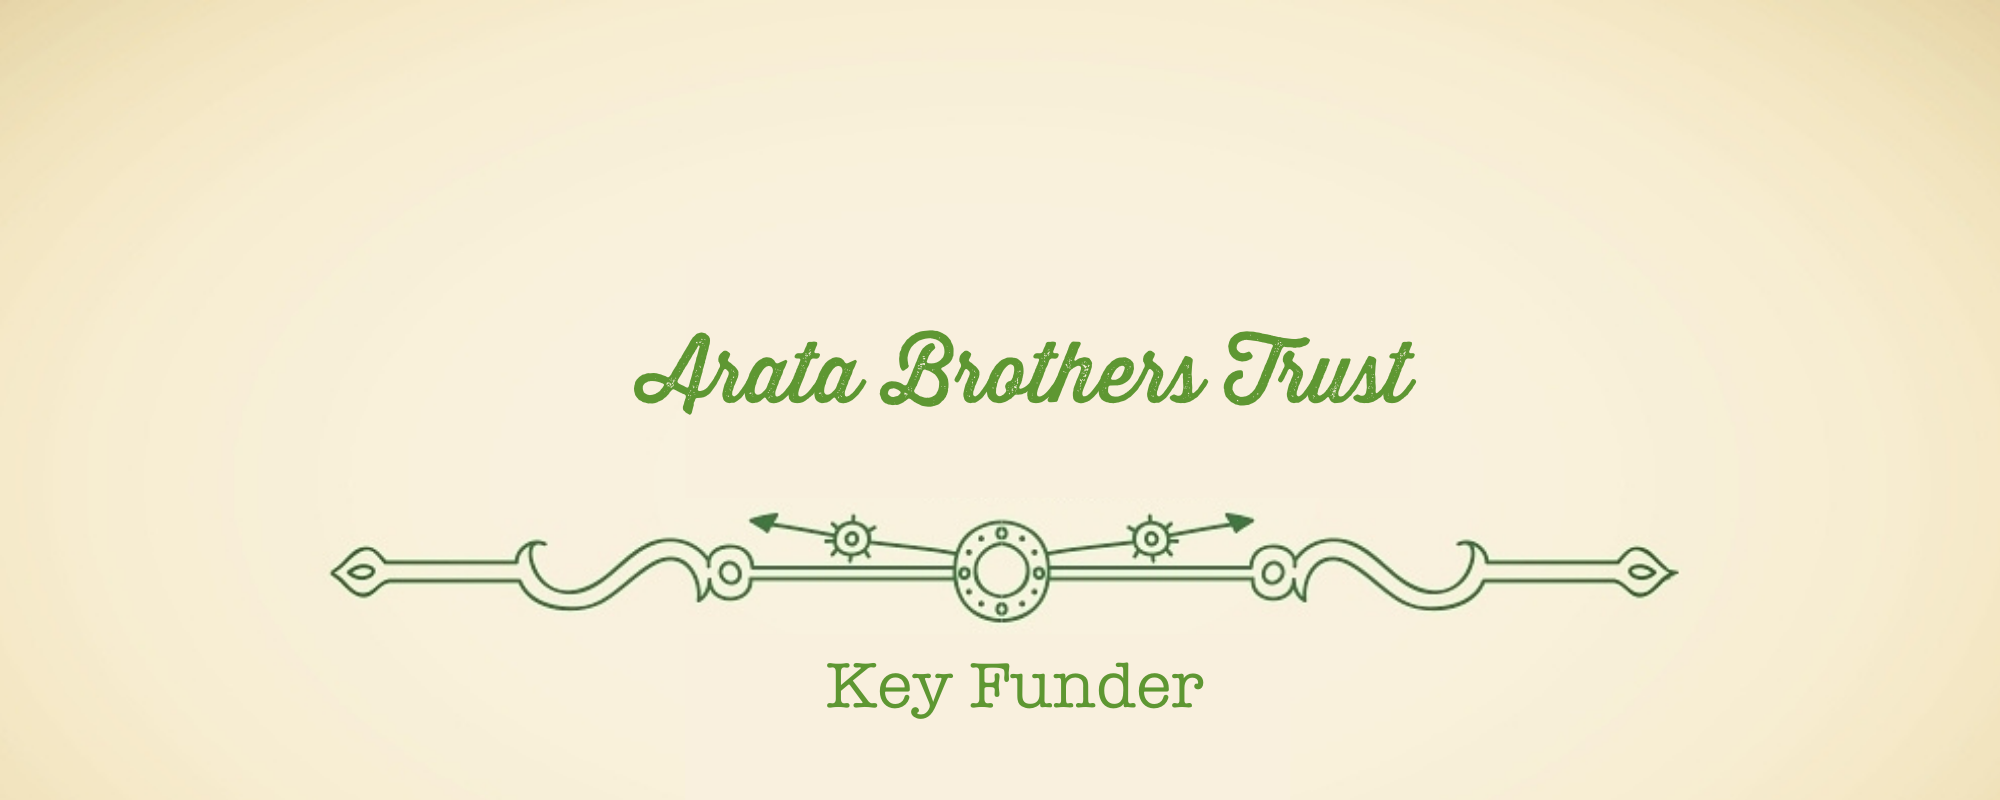 Arata Brothers Trust.png